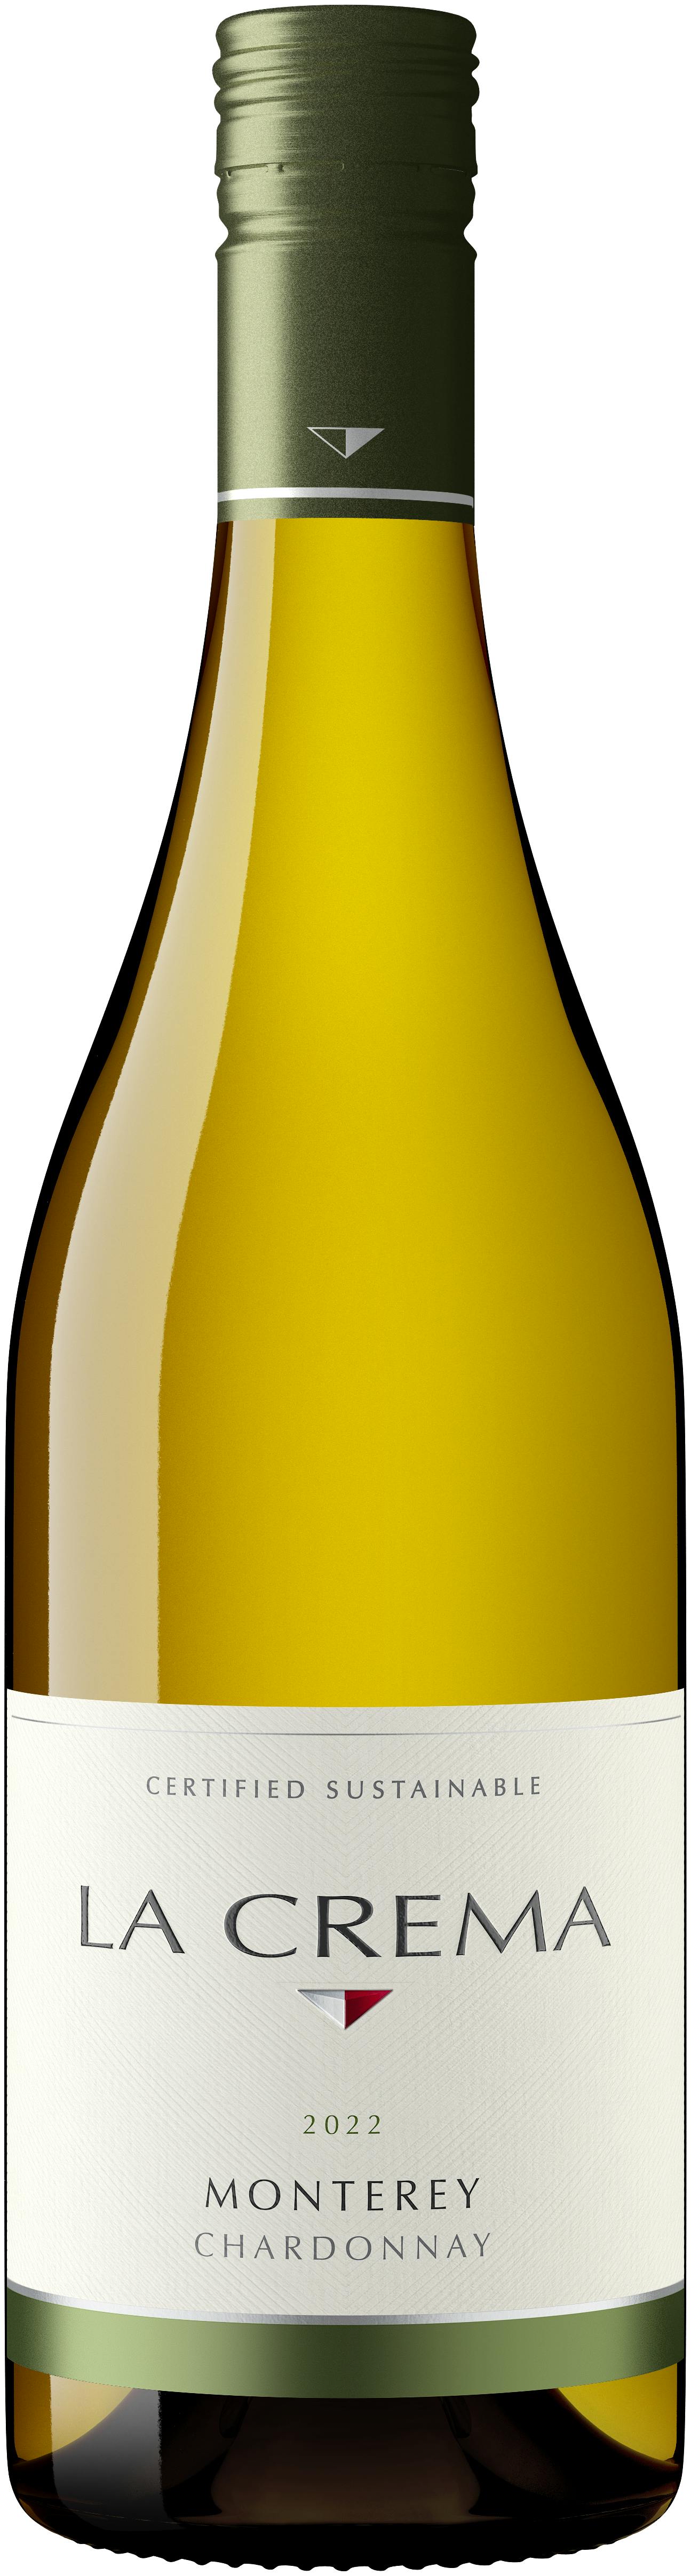 2022 - Warehouse - - Wine Central - Chardonnay La Wine - Wine Liquor Crema & - - sustainable Coast - California White